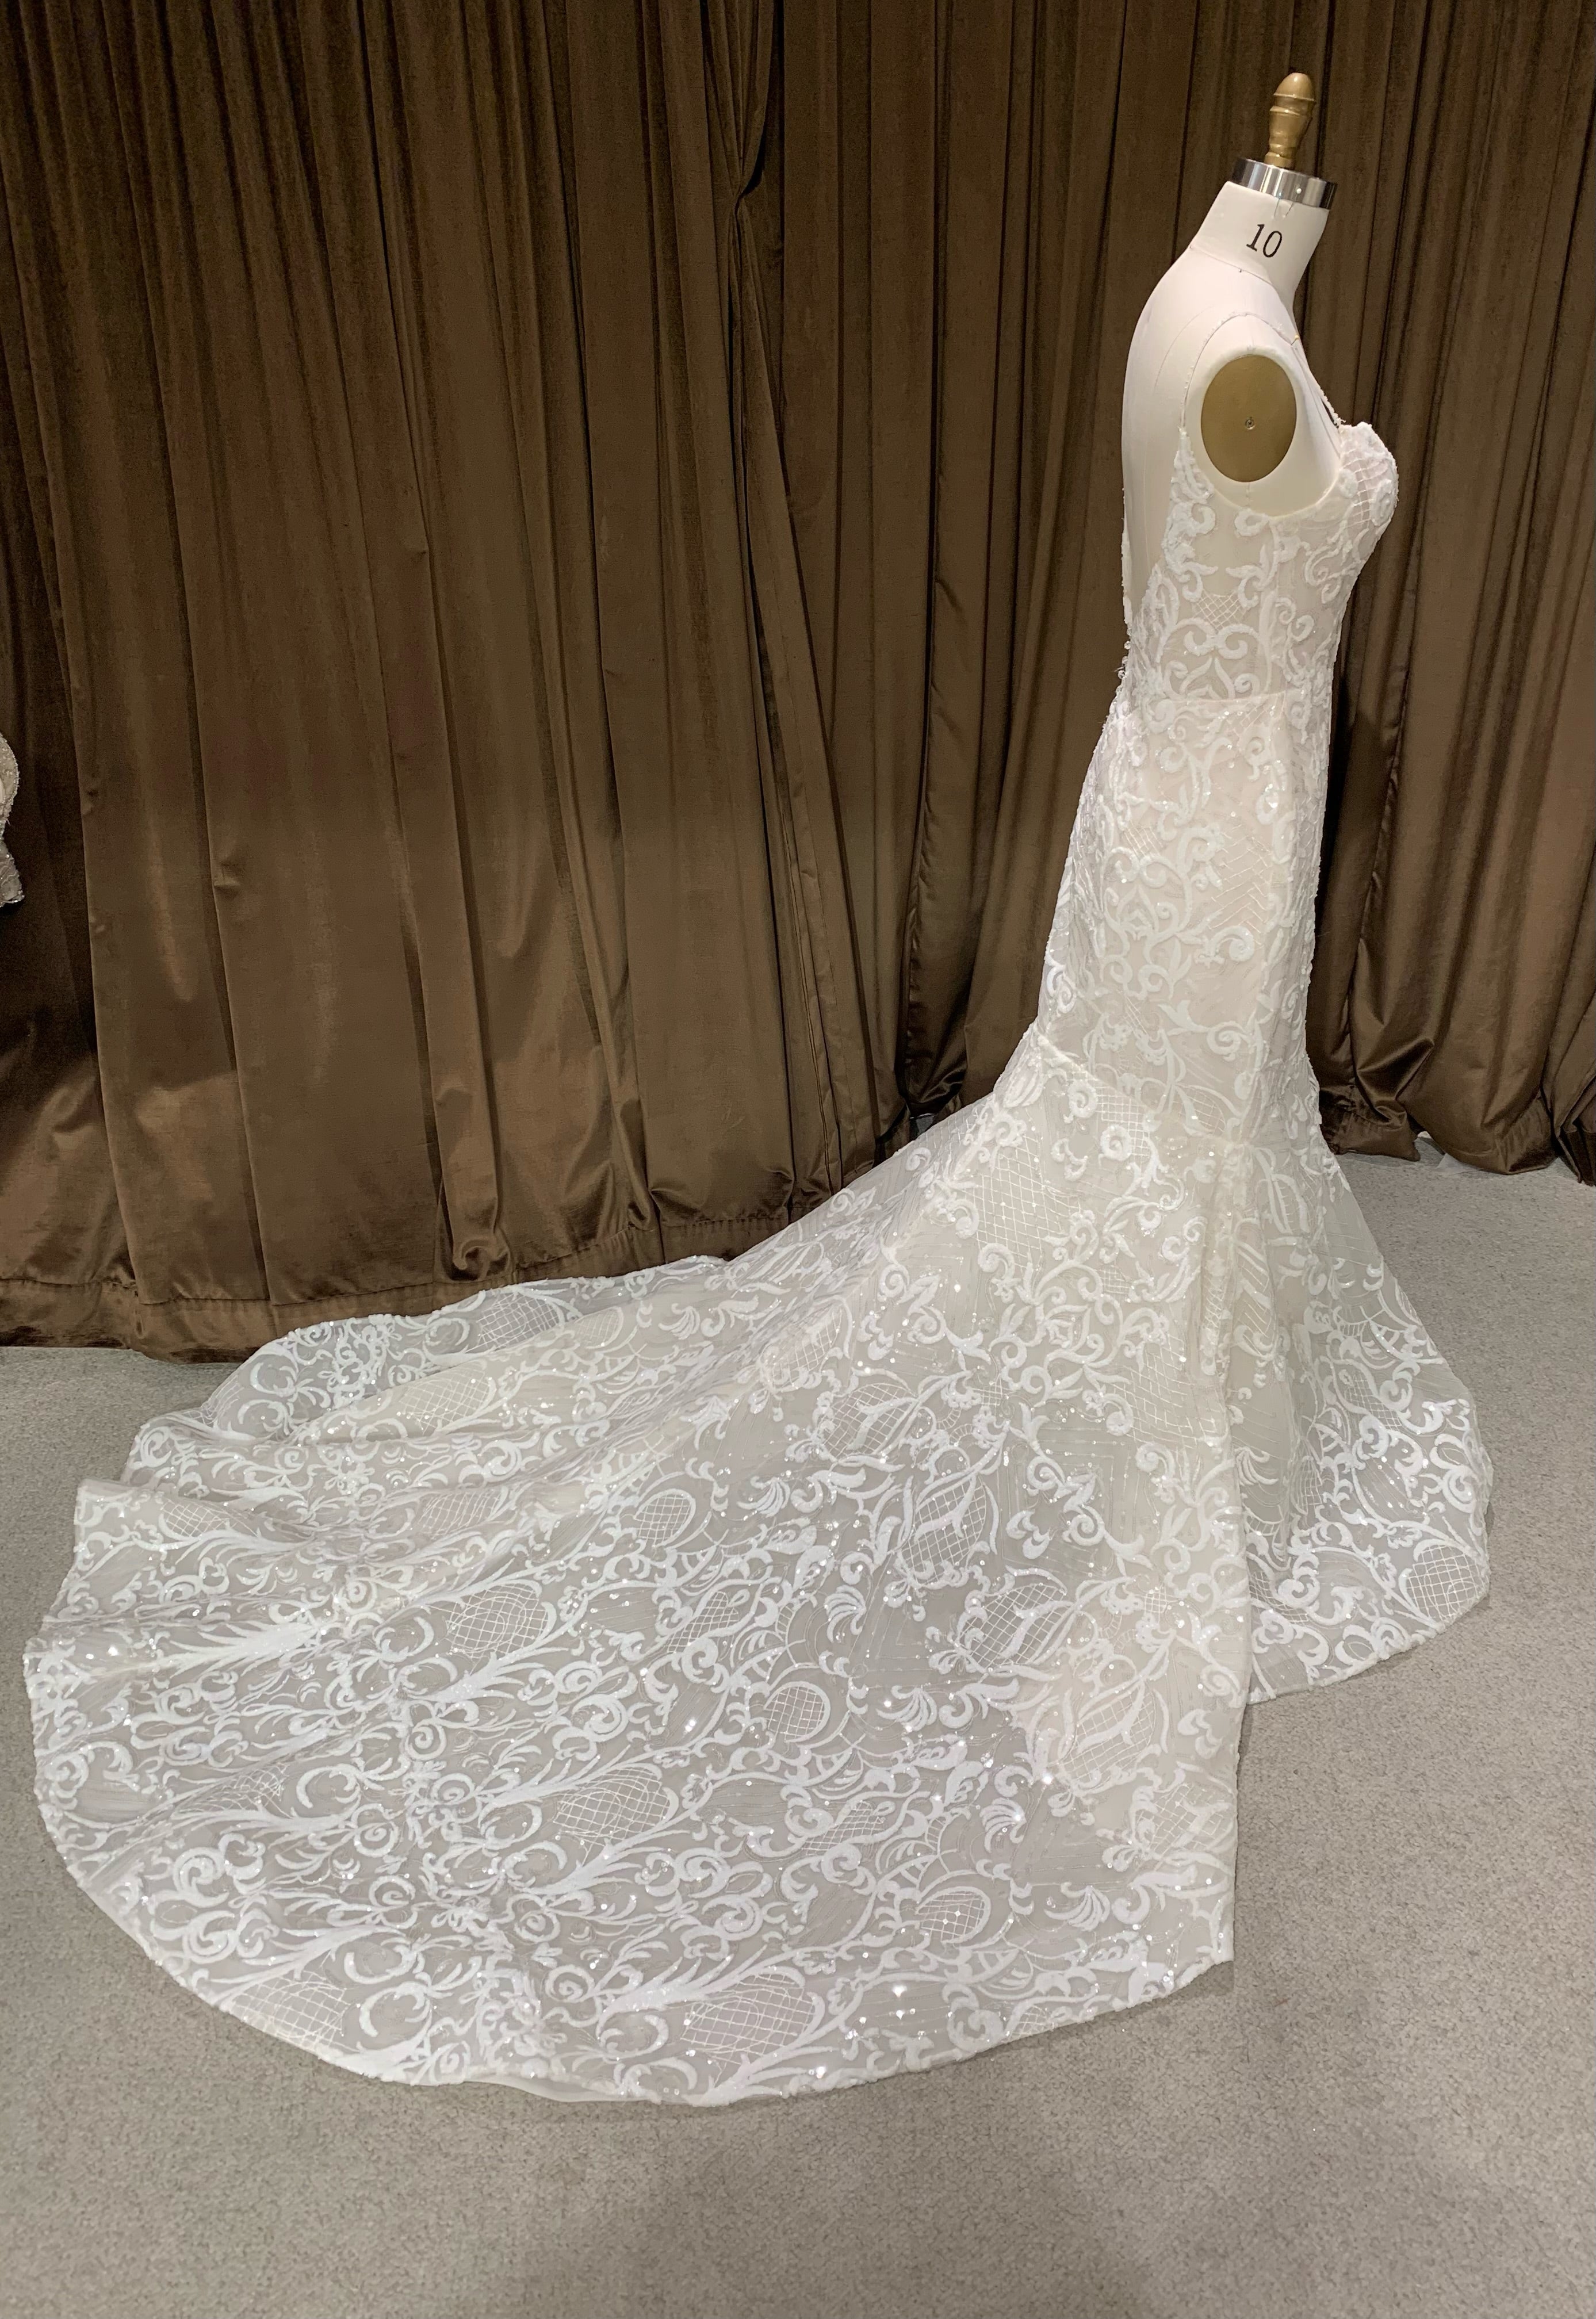 GC#34067 - Enzoani Natalia Wedding Dress in Size 14